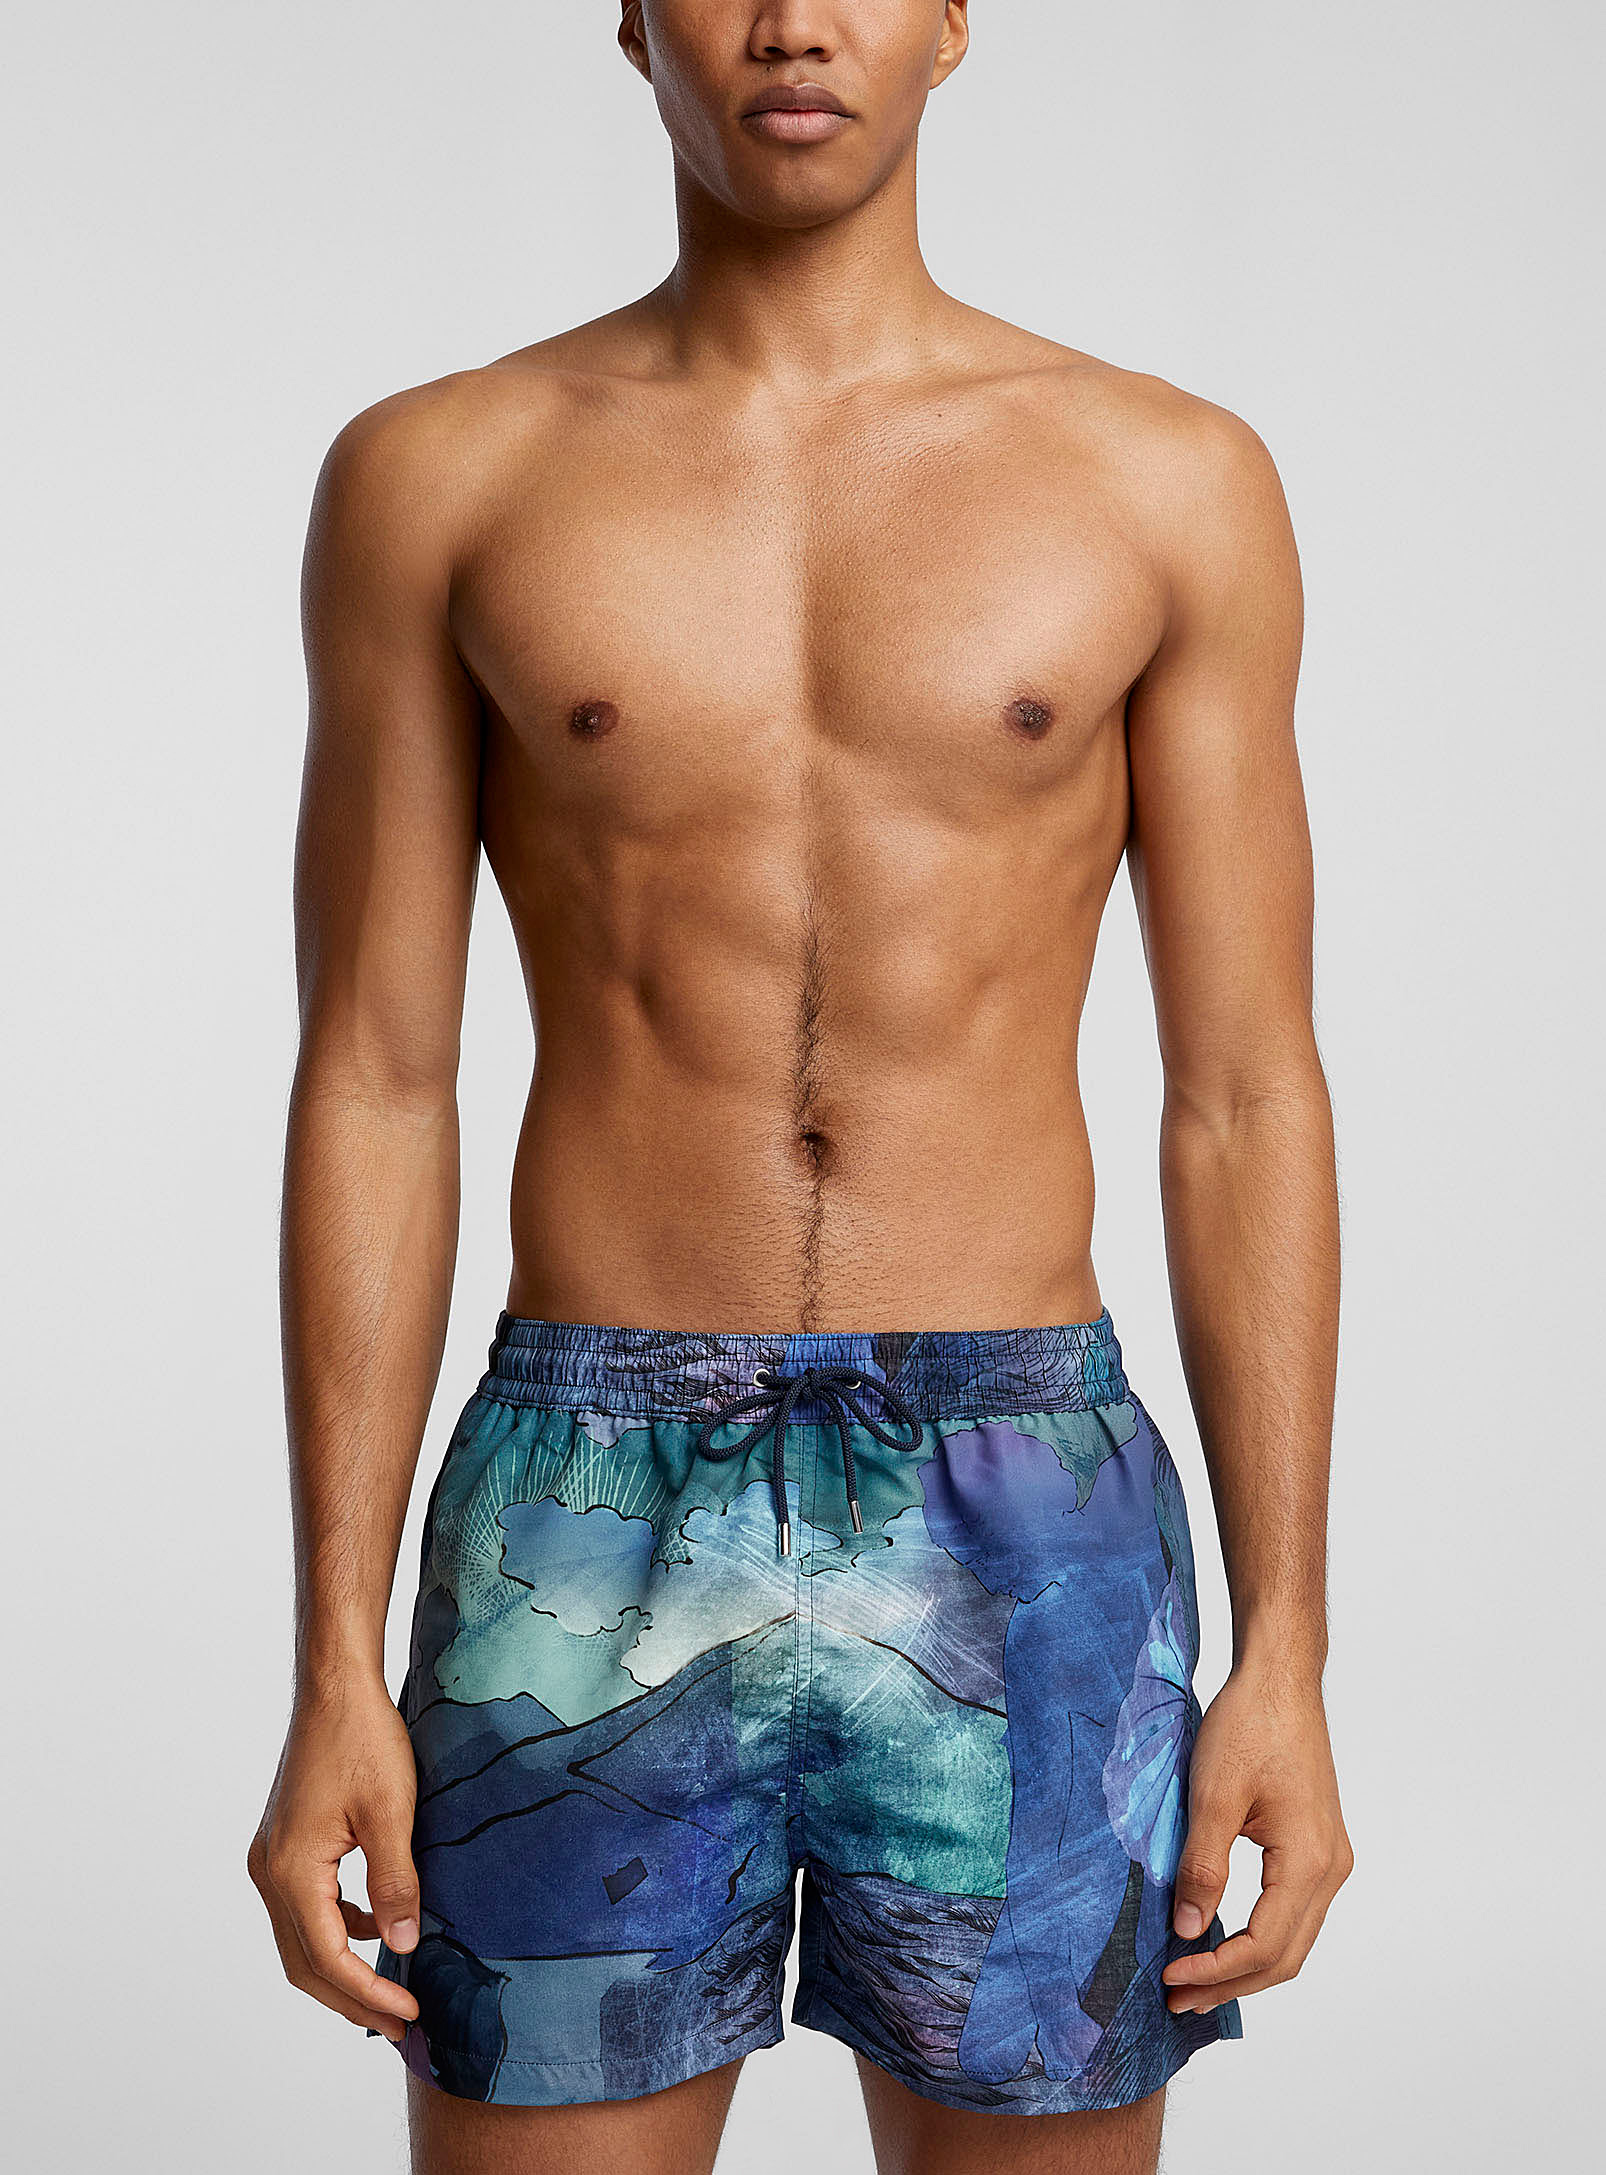 Paul Smith - Men's Narcissus print swim trunks